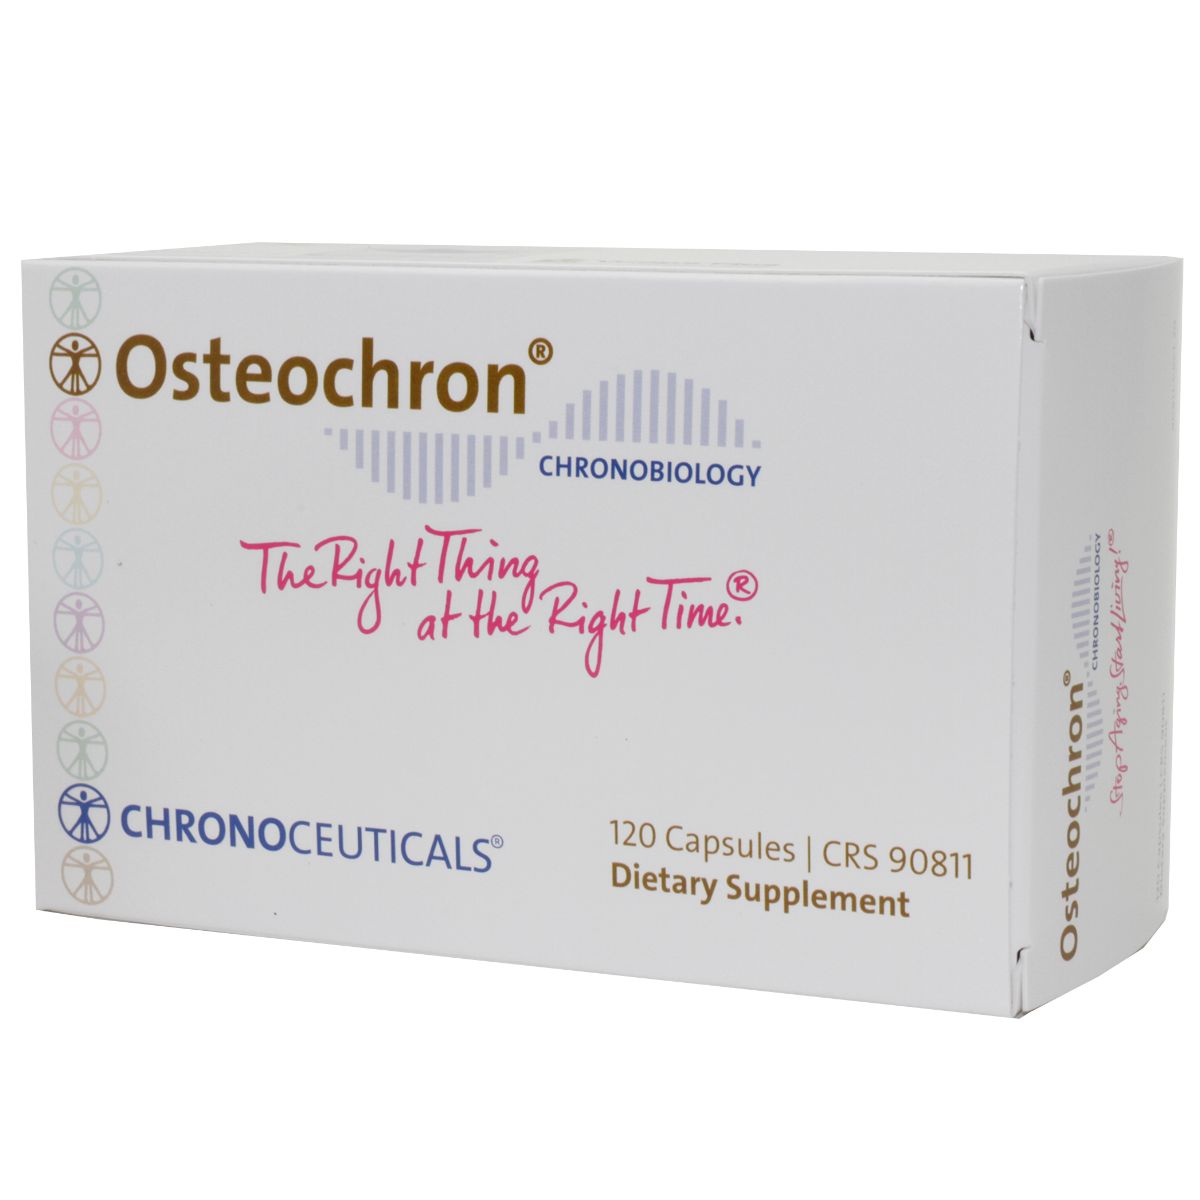 Osteochron®